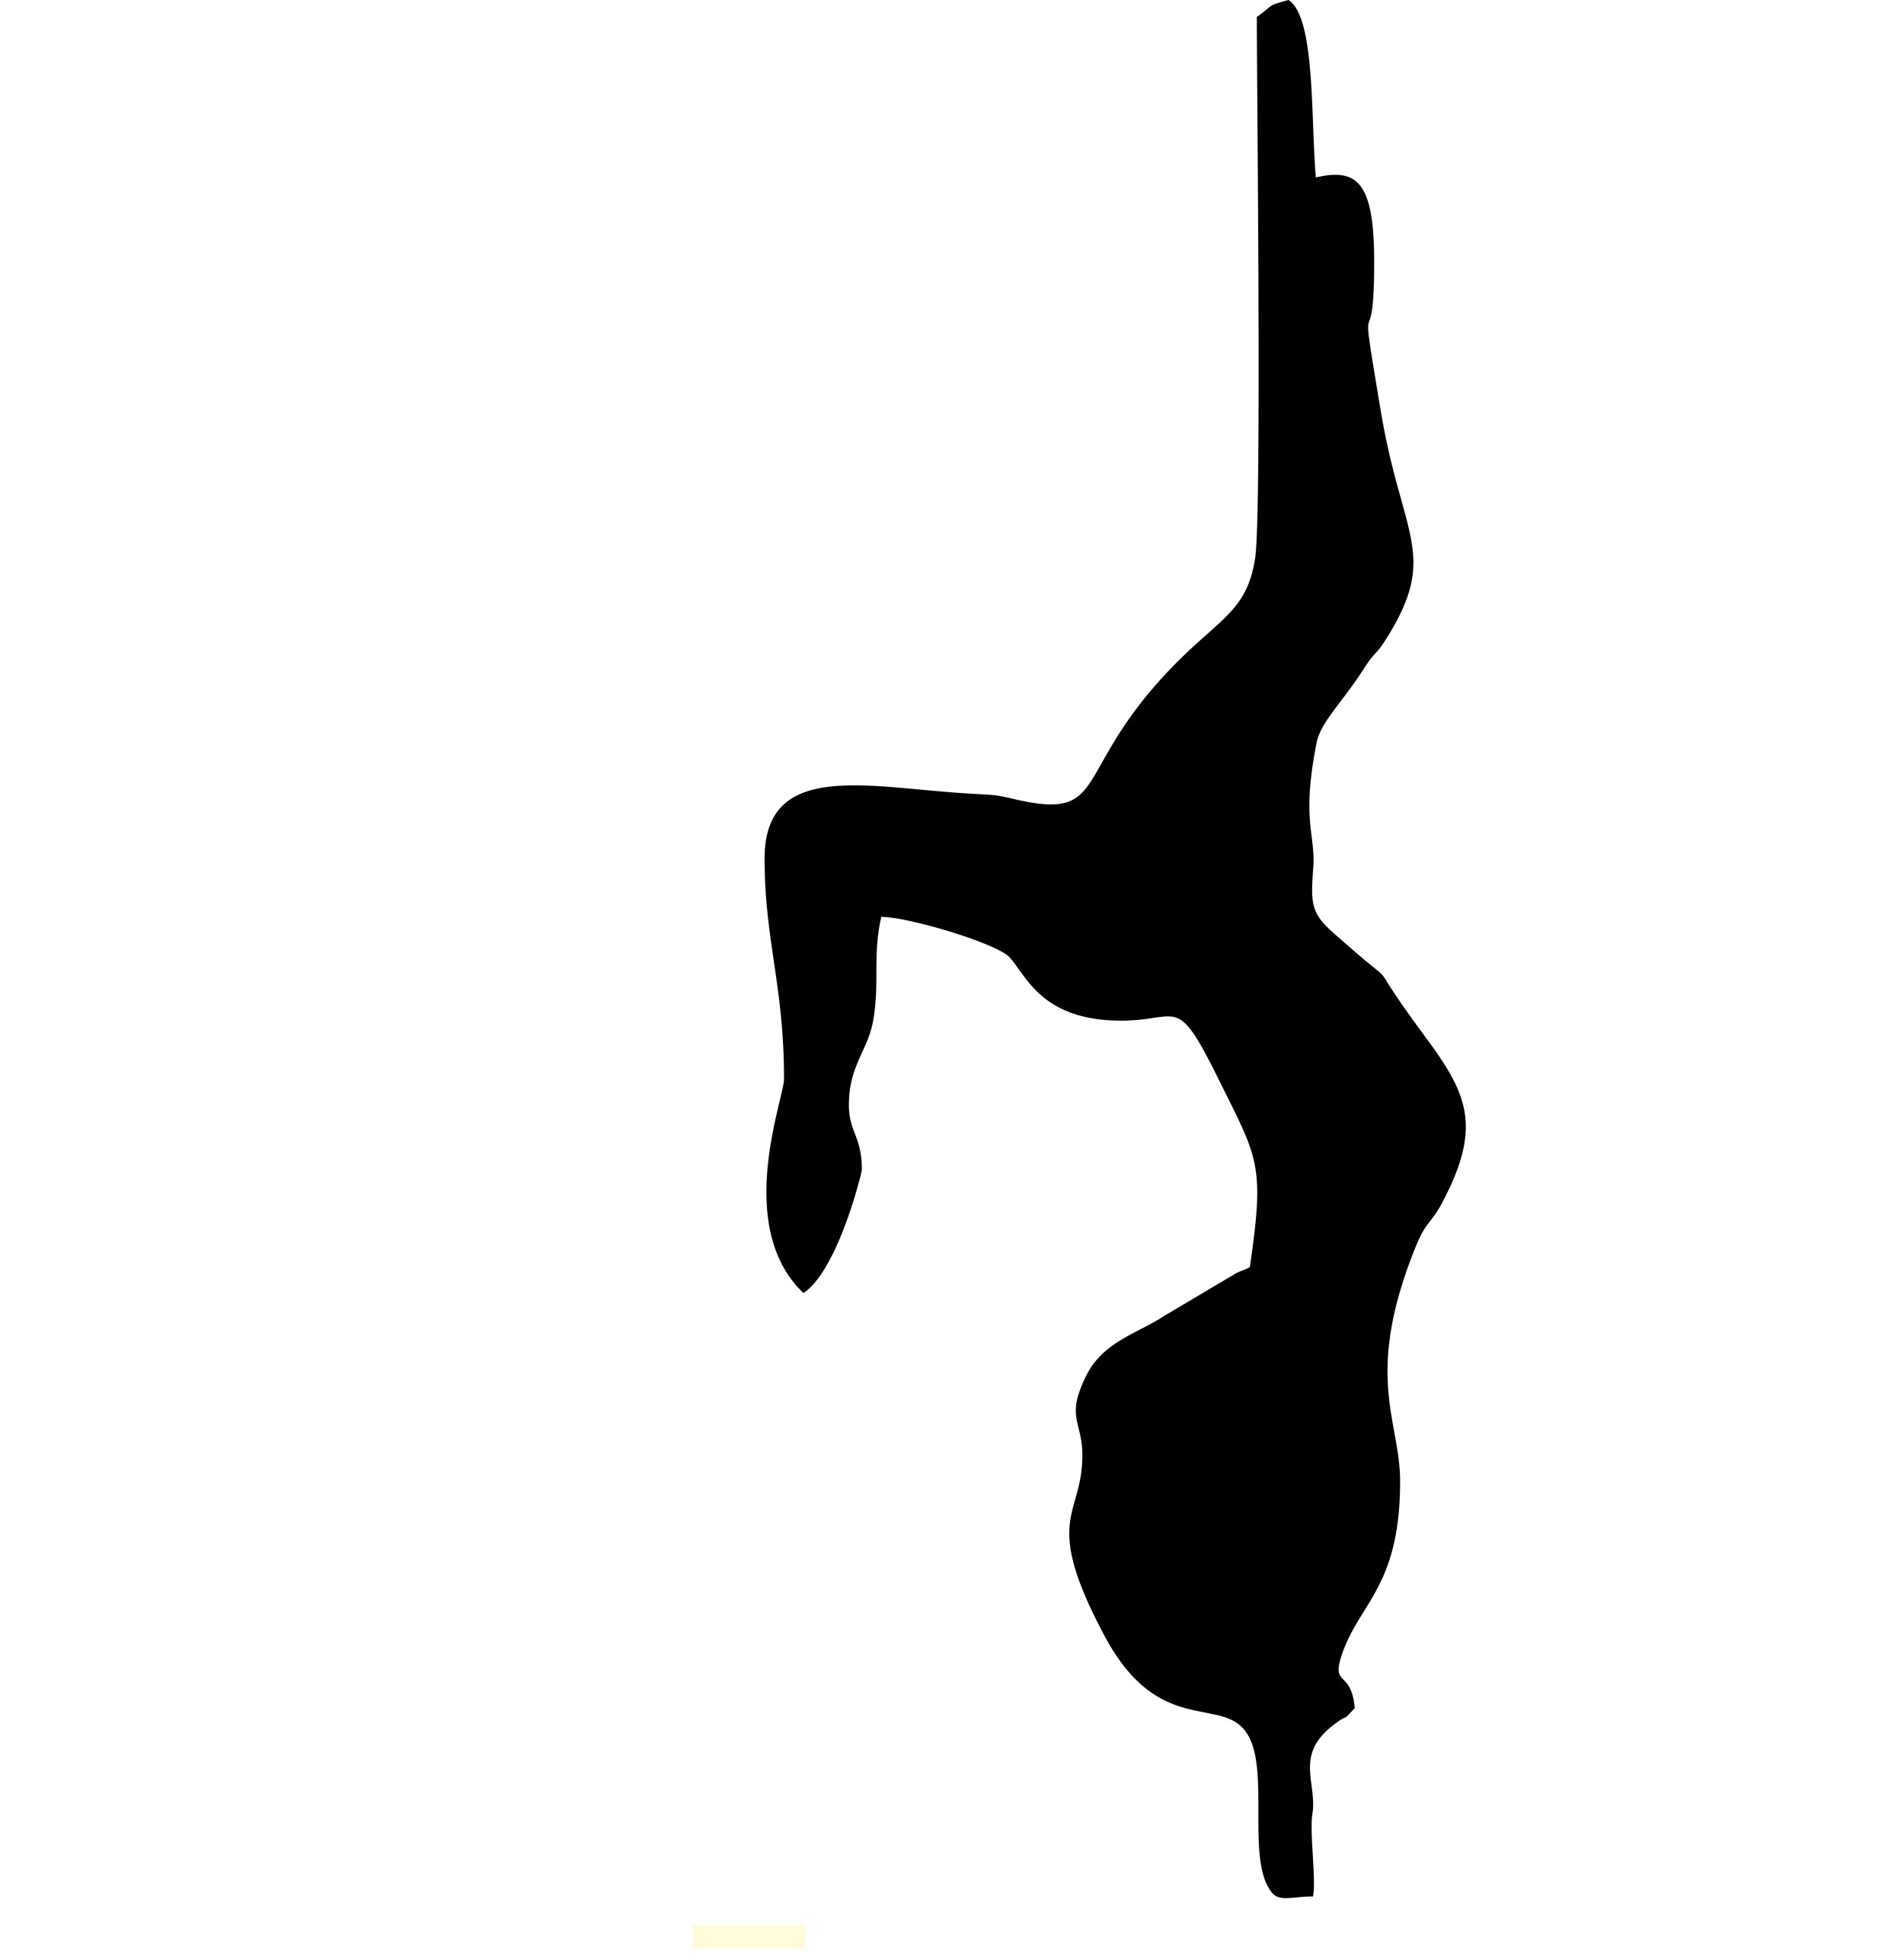 Pole Dancer Silhouette Clipart.